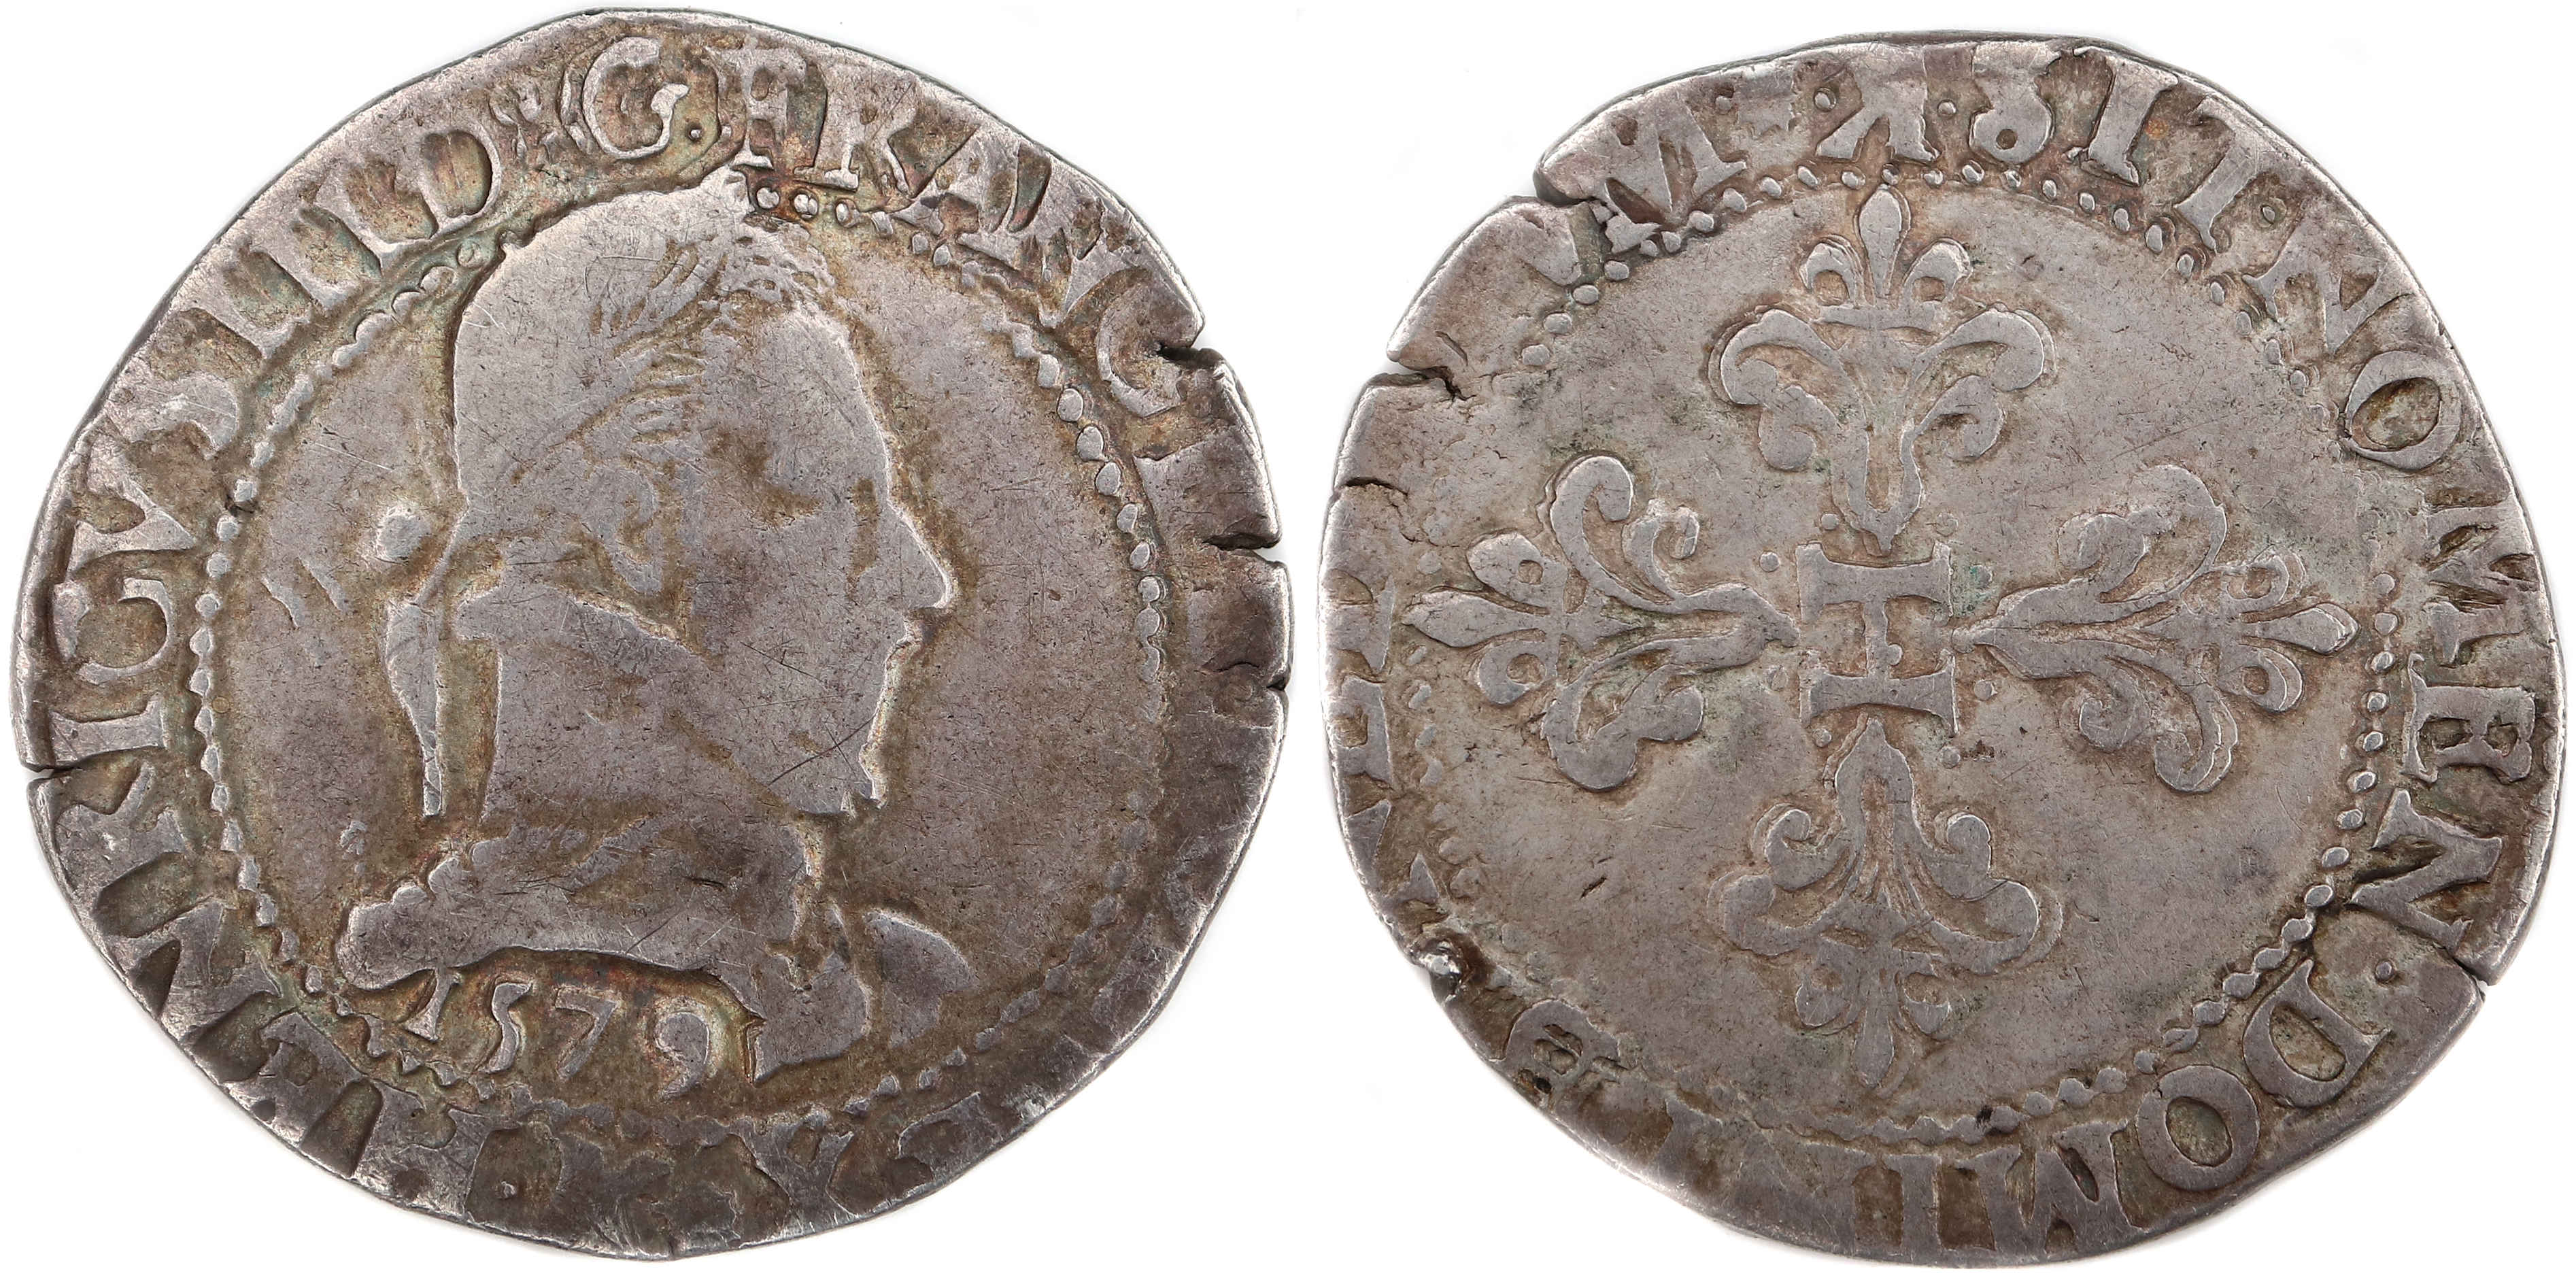 HENRI III-FRANC-1579-bORDEAUX